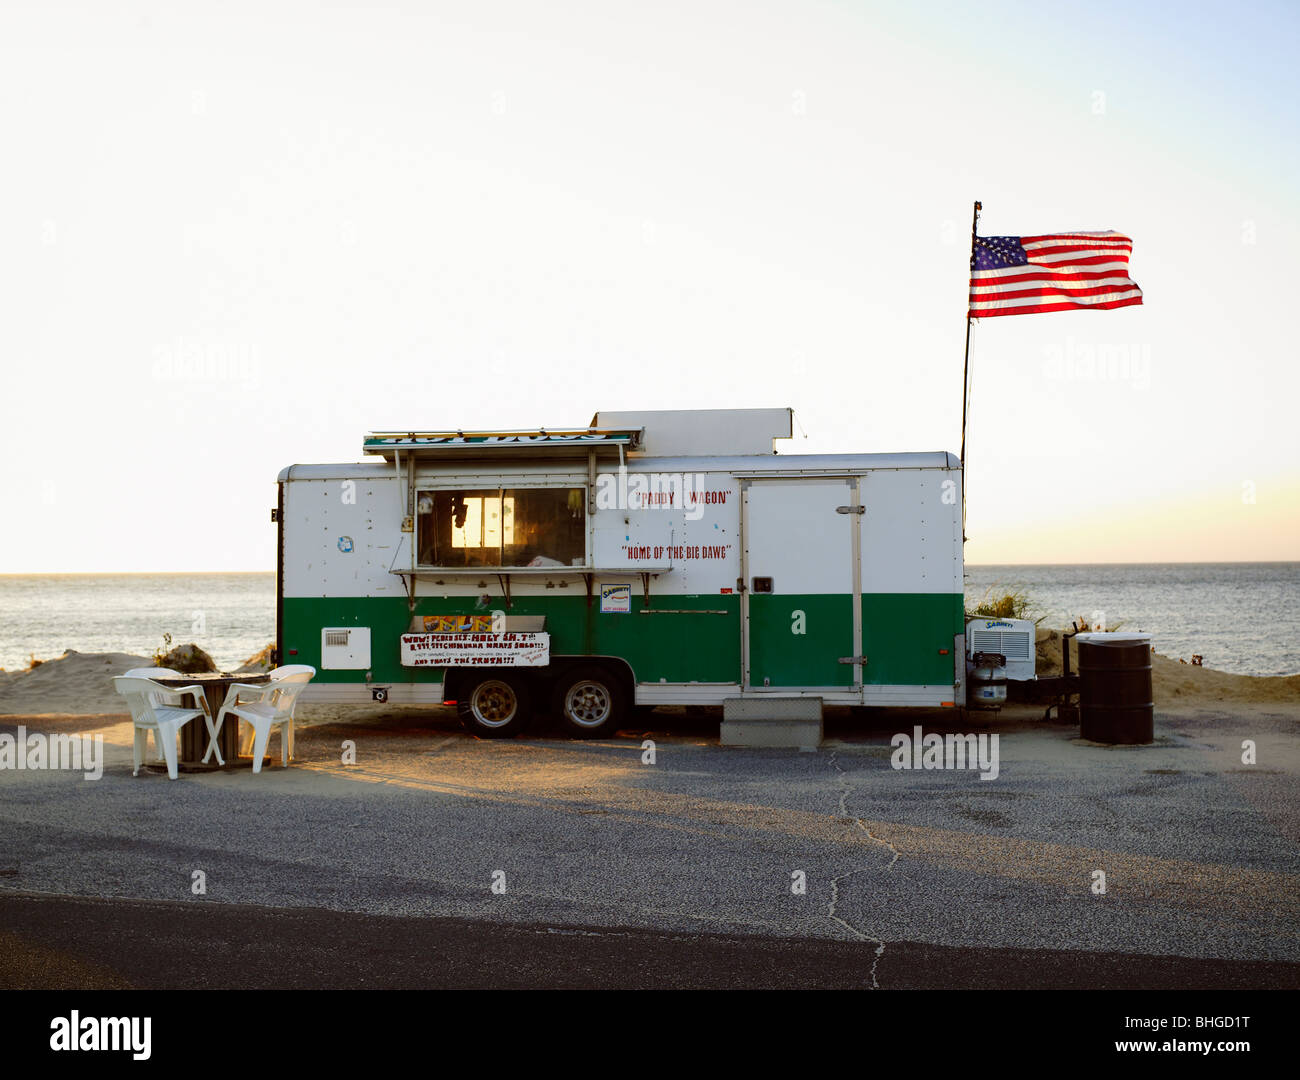 Ein Kiosk am Meer bei Sonnenuntergang, USA. Stockfoto